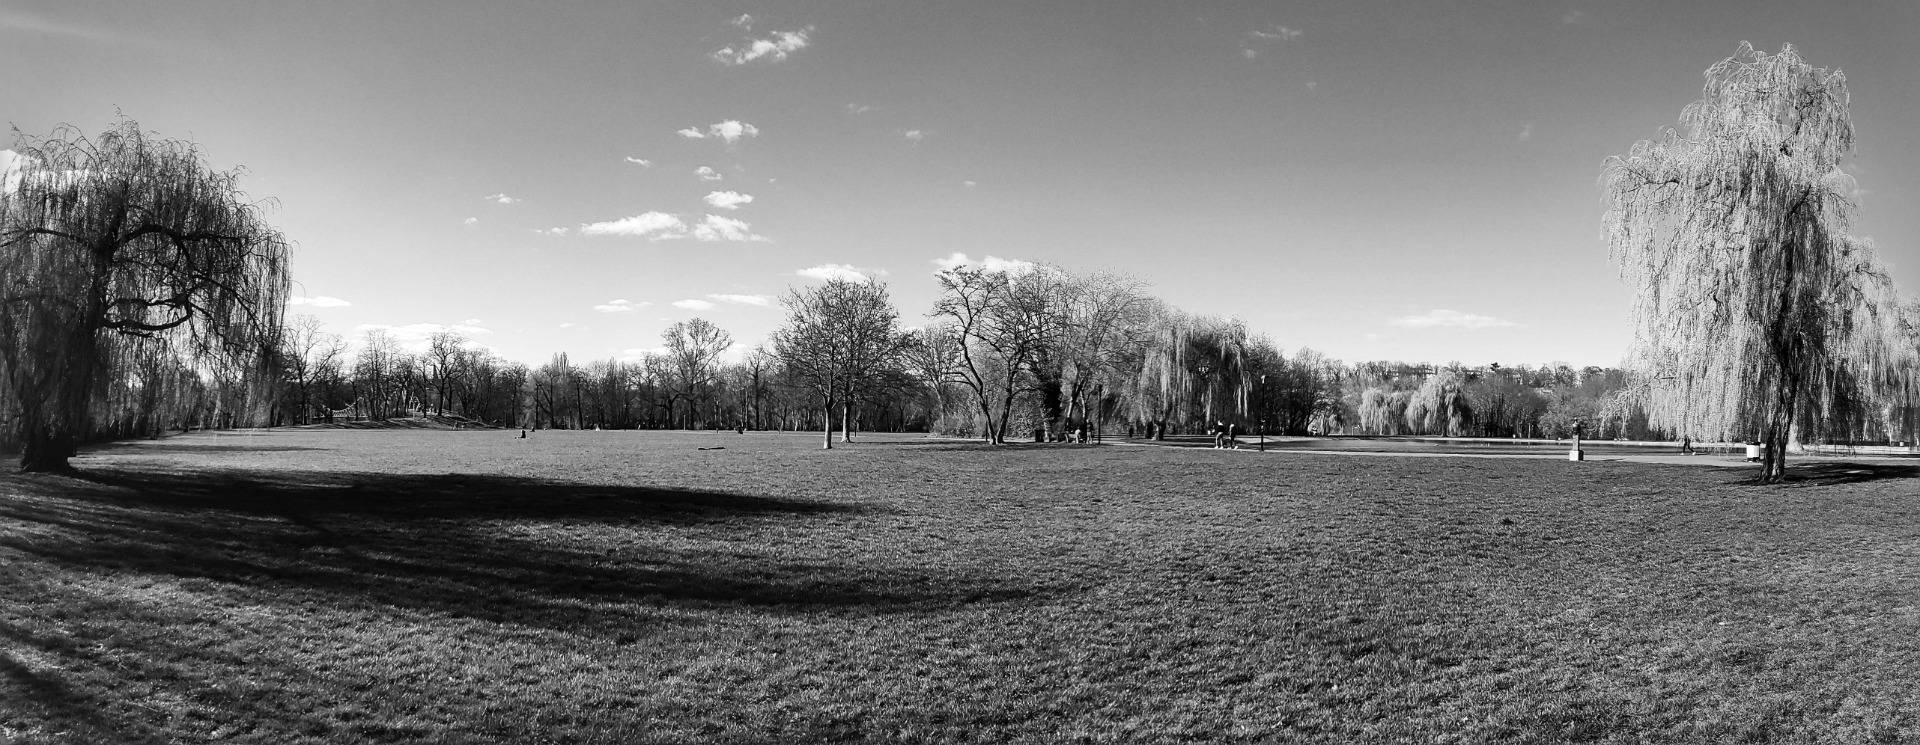 The park, empty.